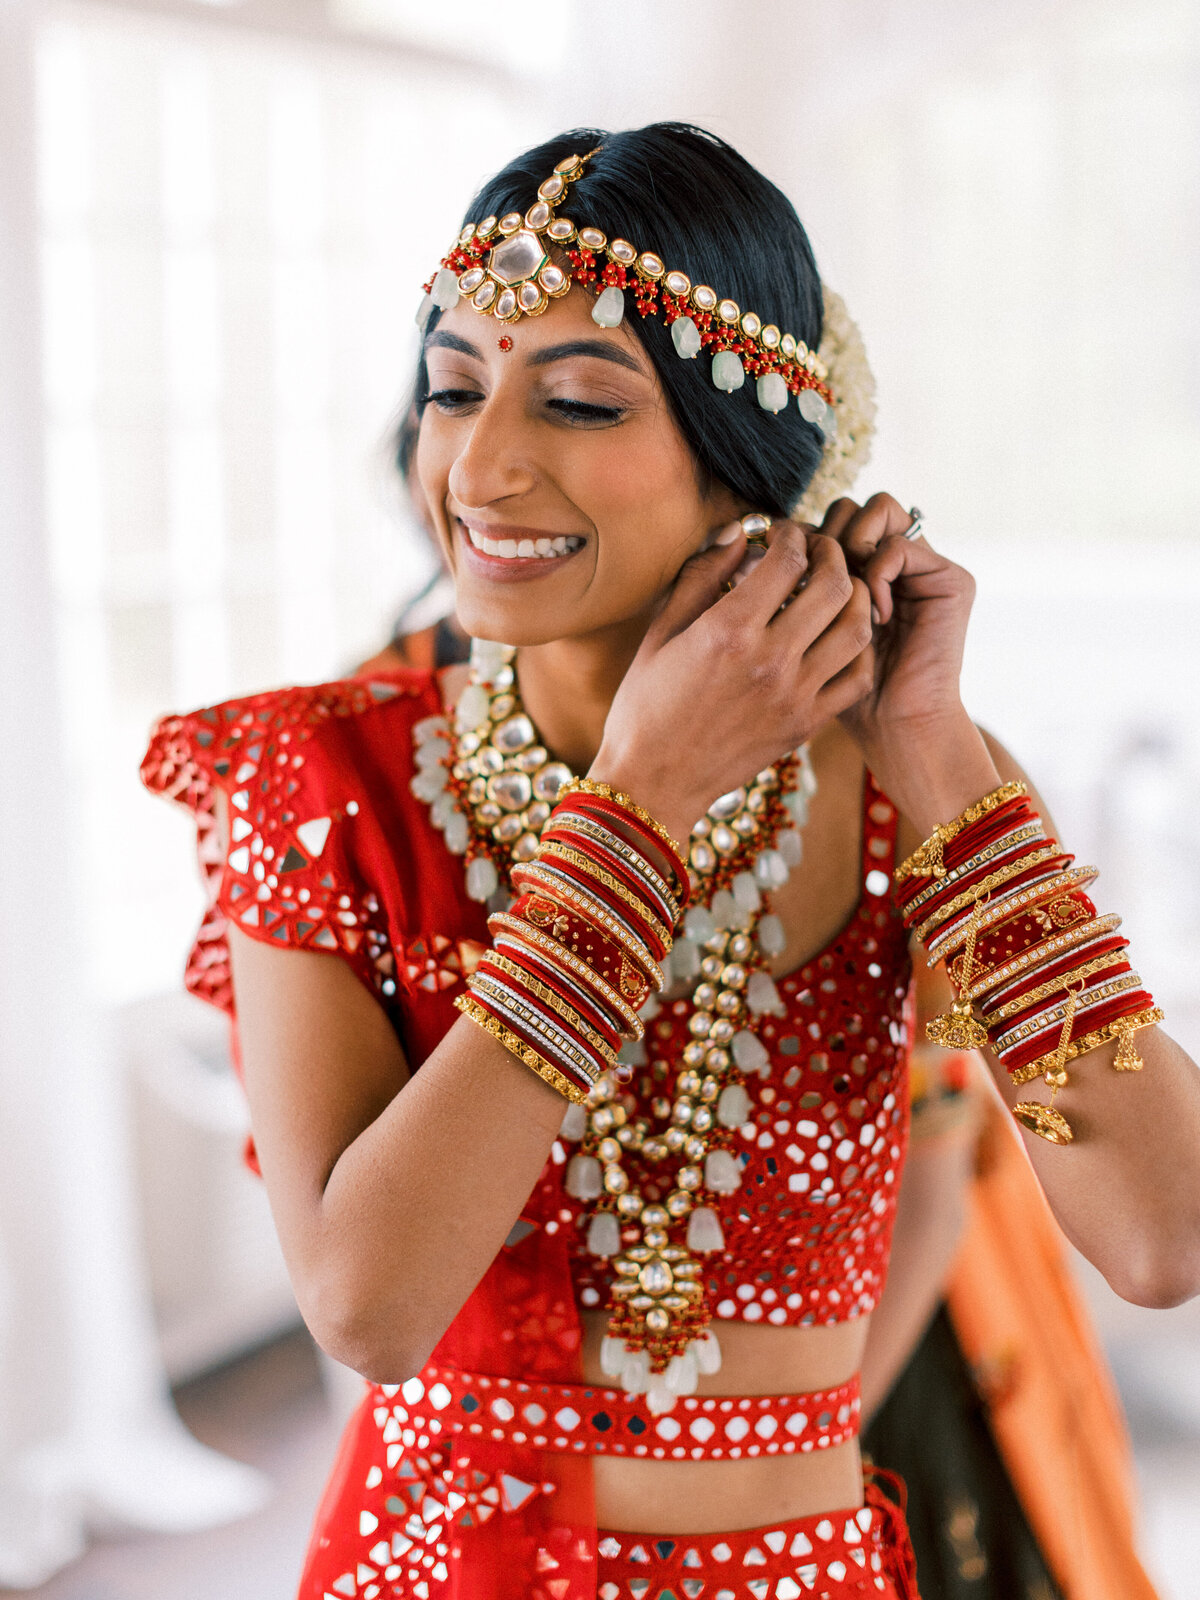 Prianka + Alex - Hindu Wedding 11 - Portraits - Bride chainging out earrings